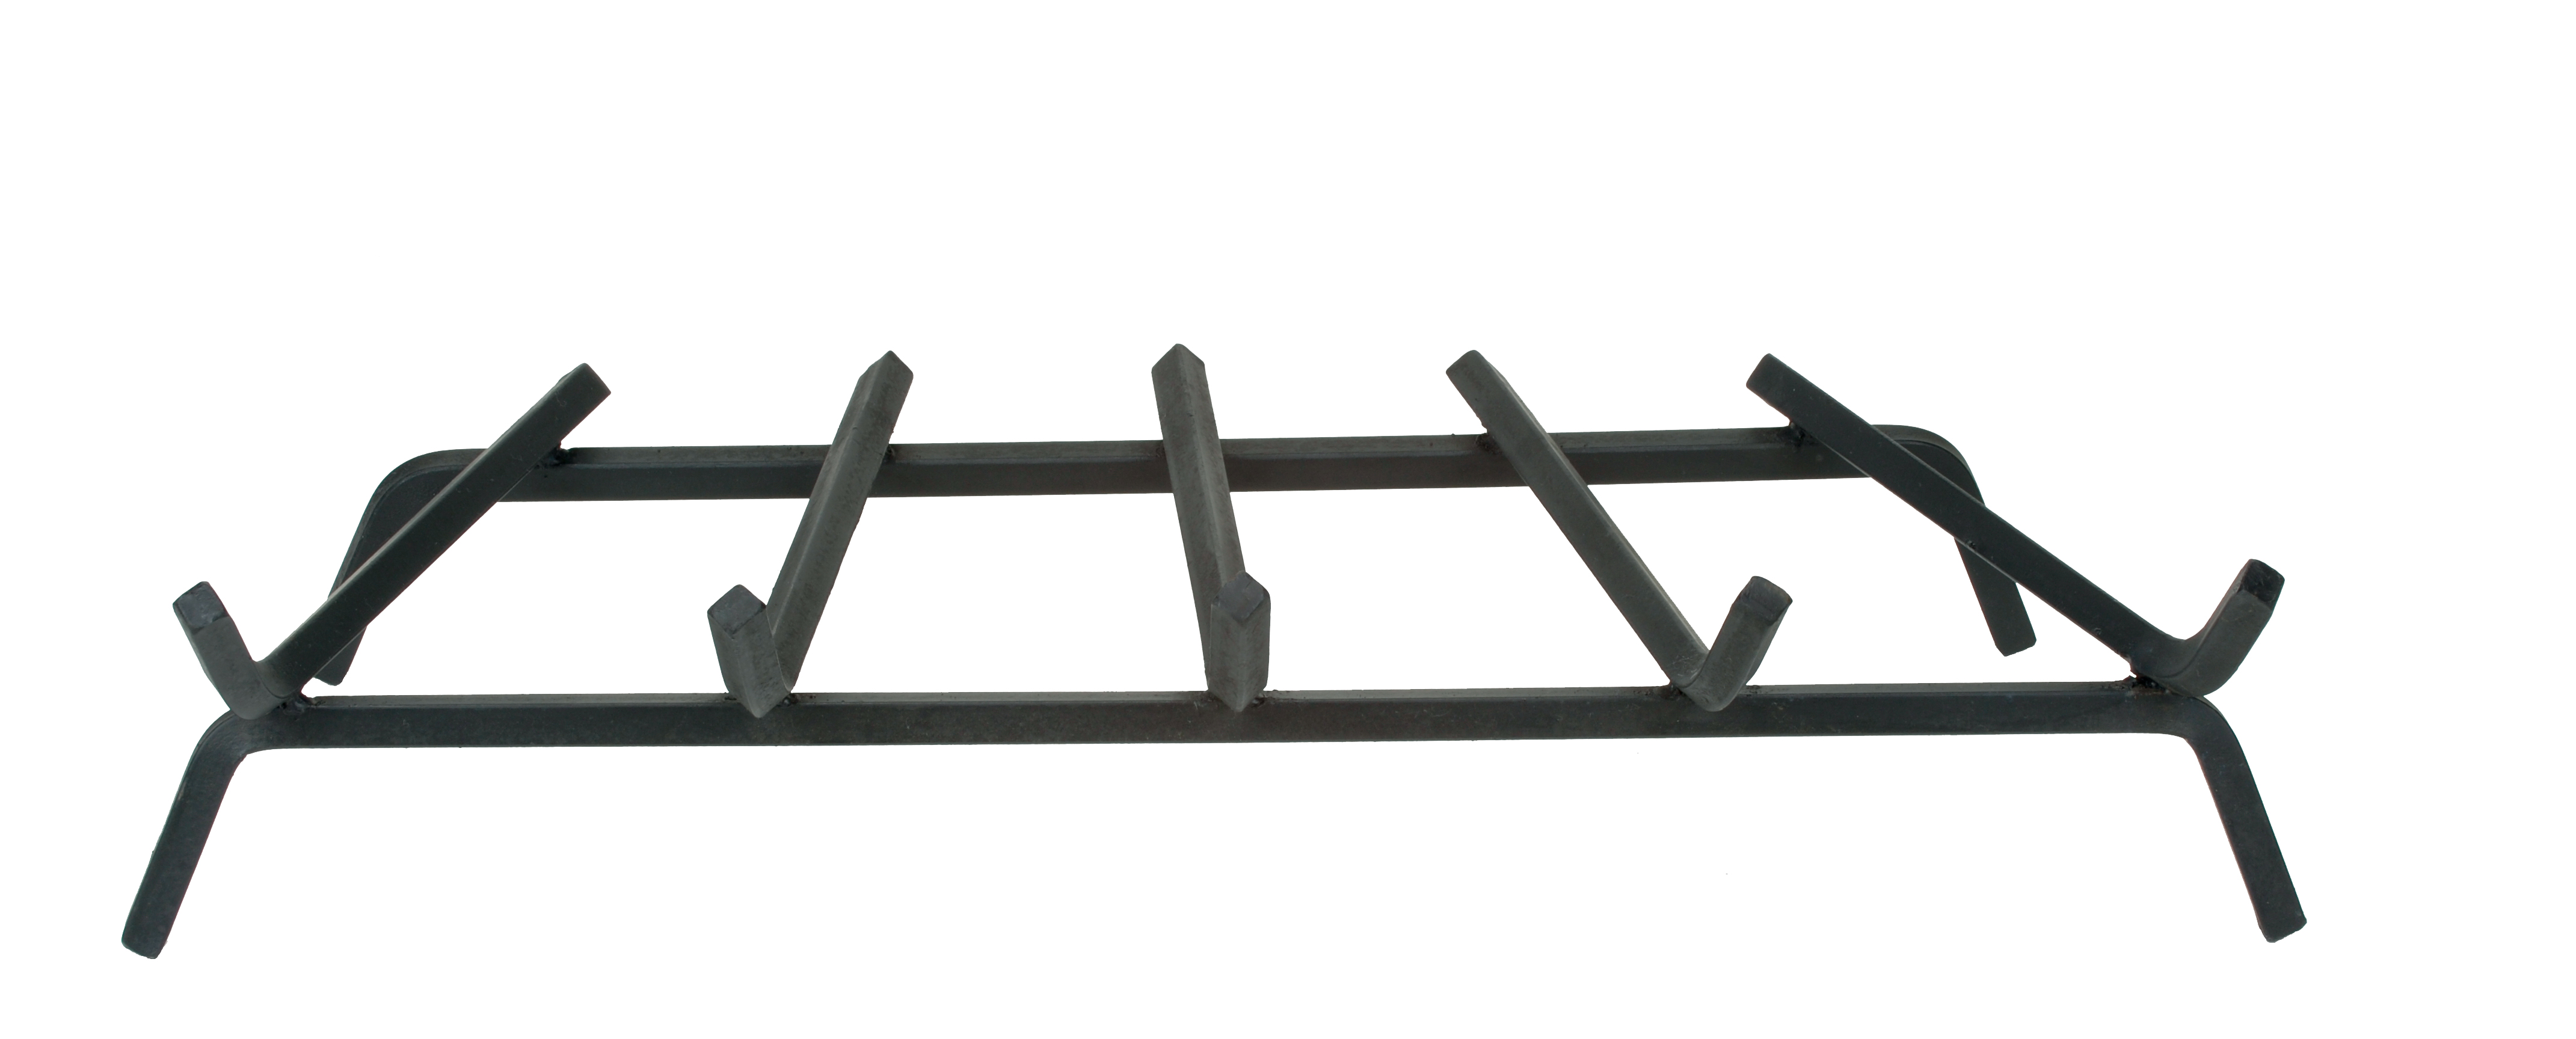 black steel 1/2 sq 5 bar grate product image